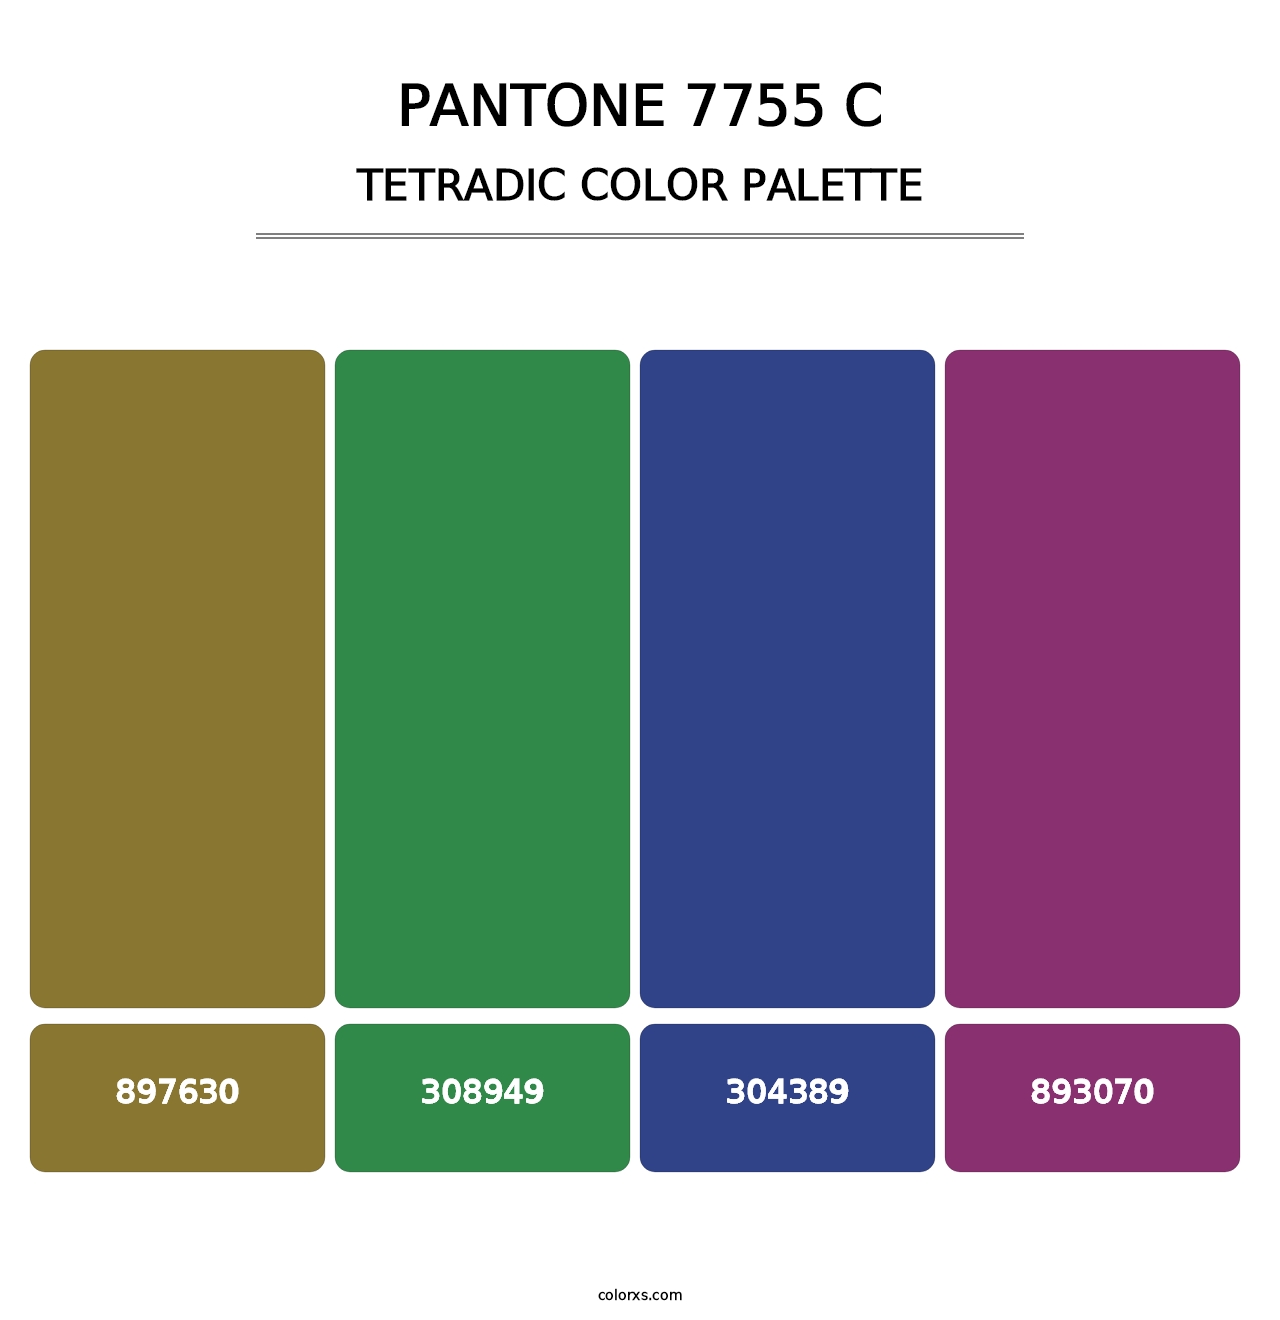 PANTONE 7755 C - Tetradic Color Palette